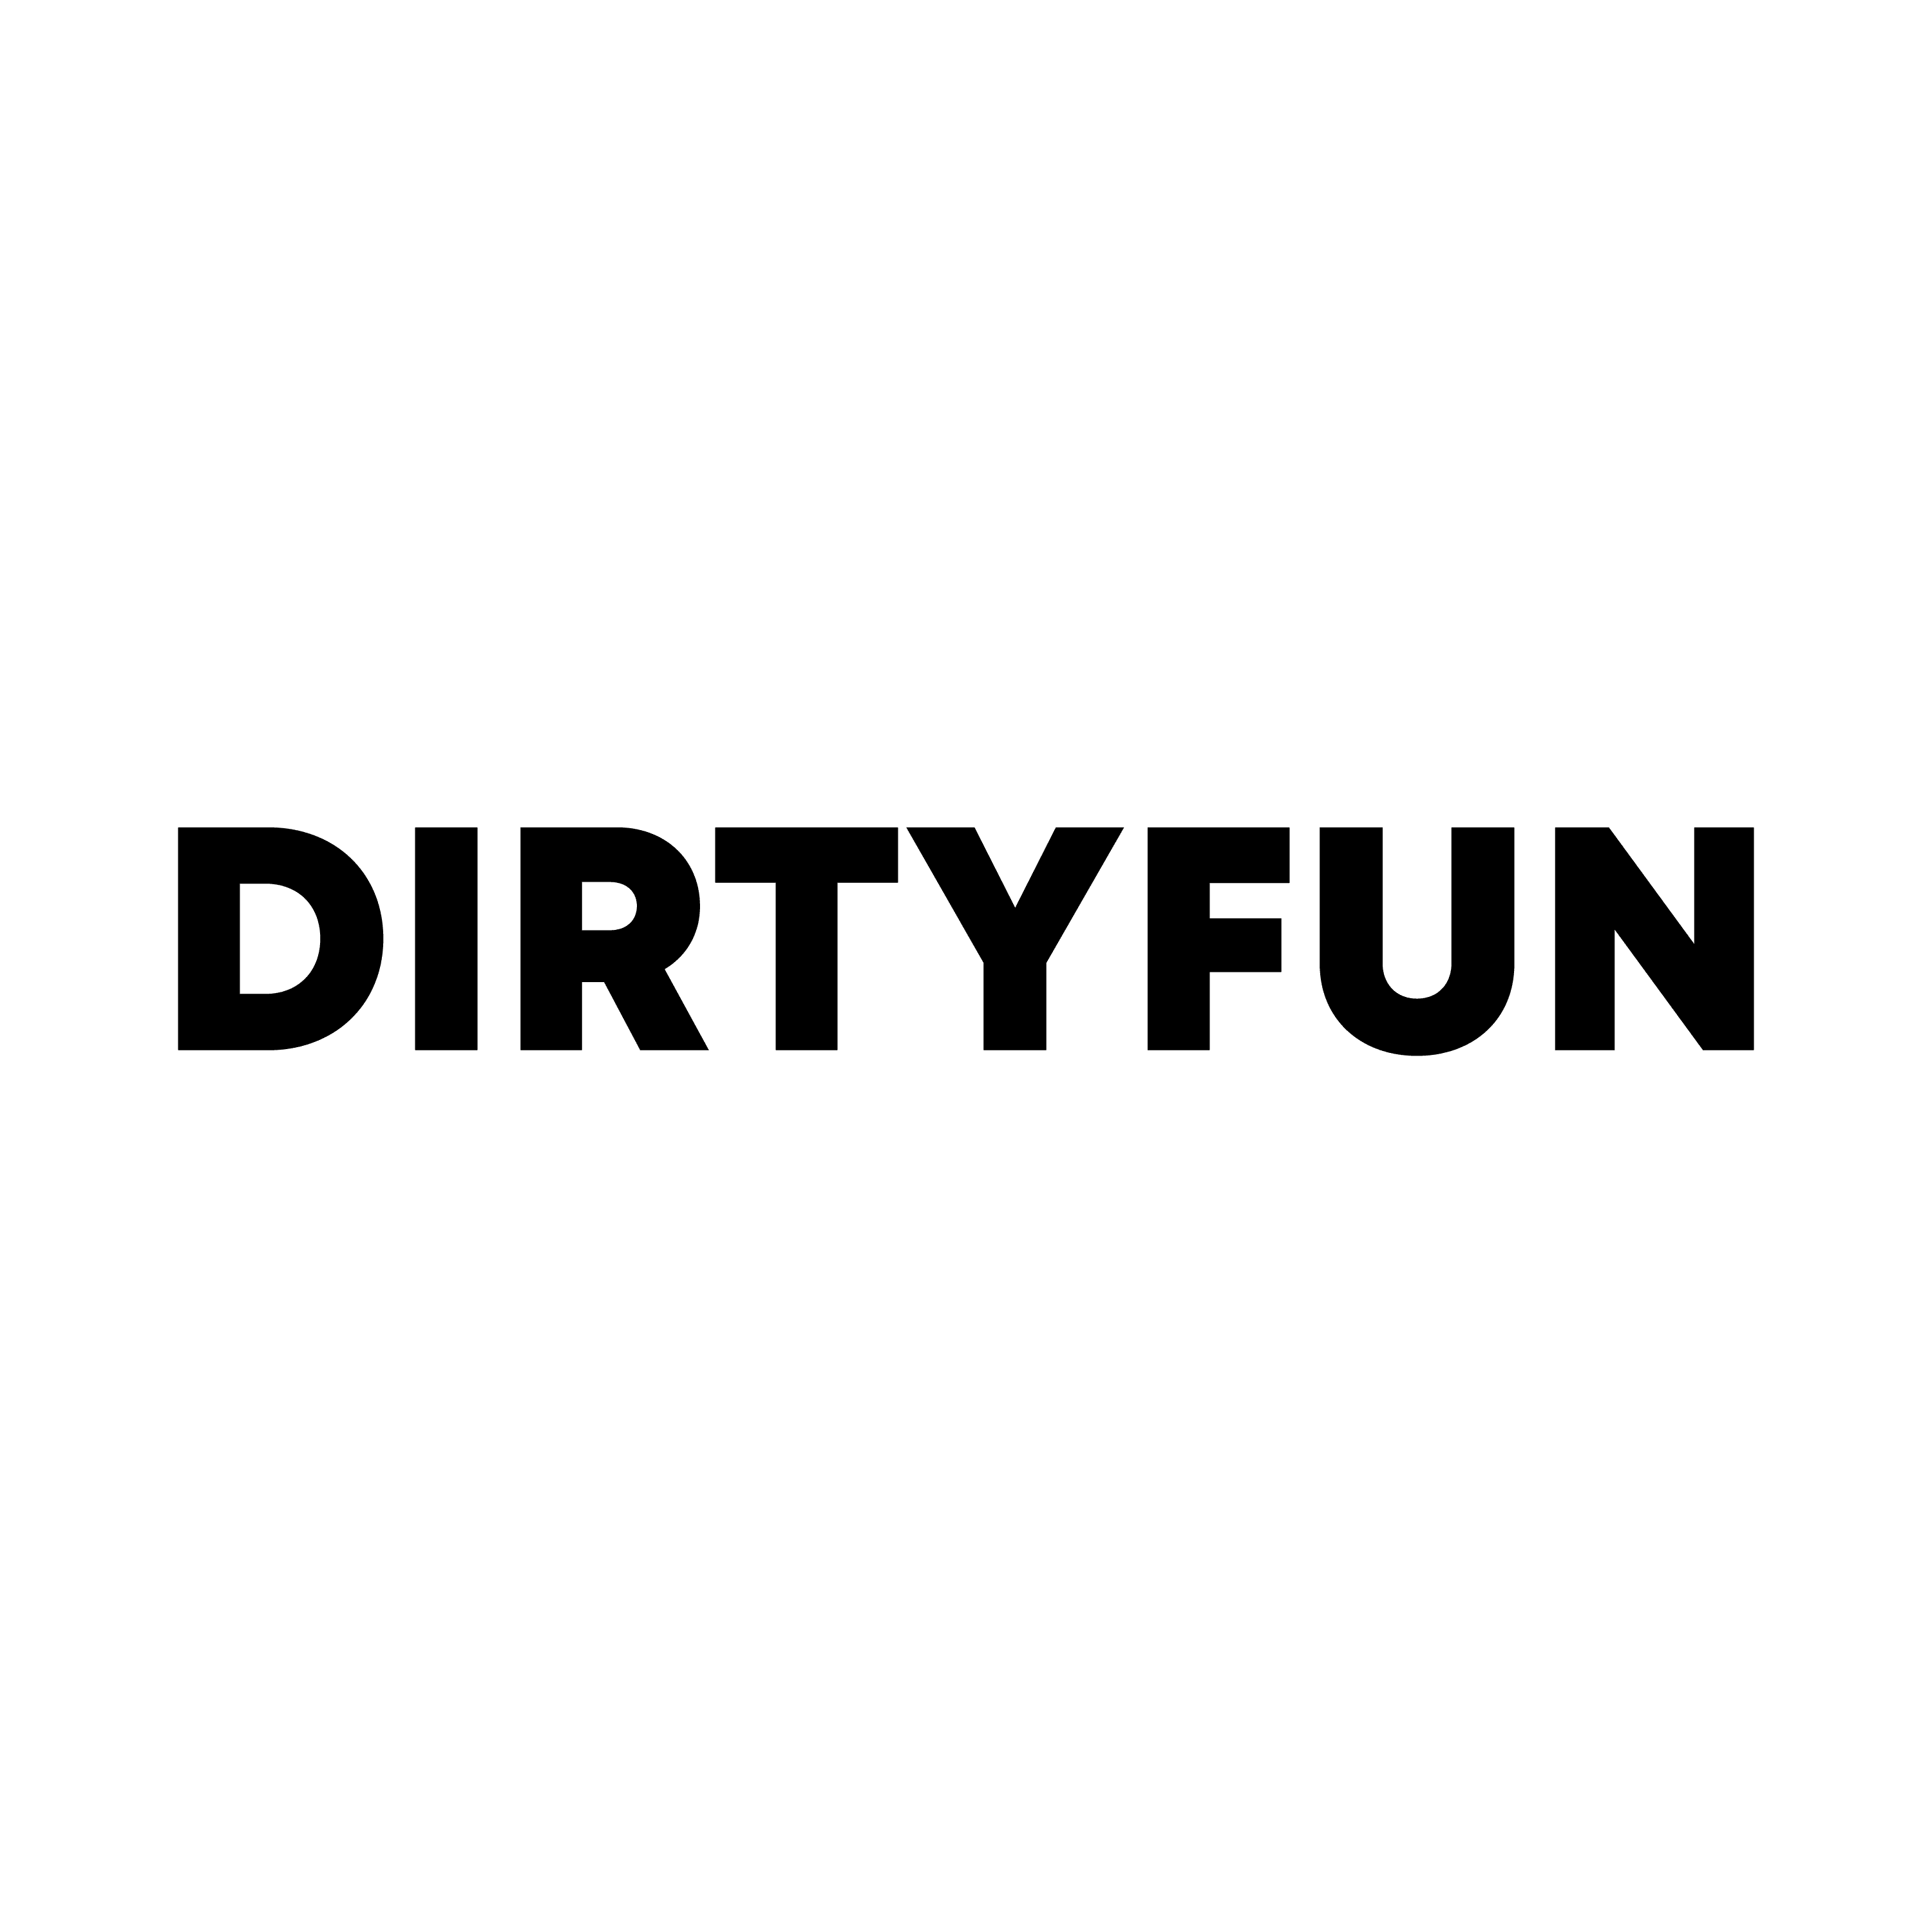 Dirtyfun Music